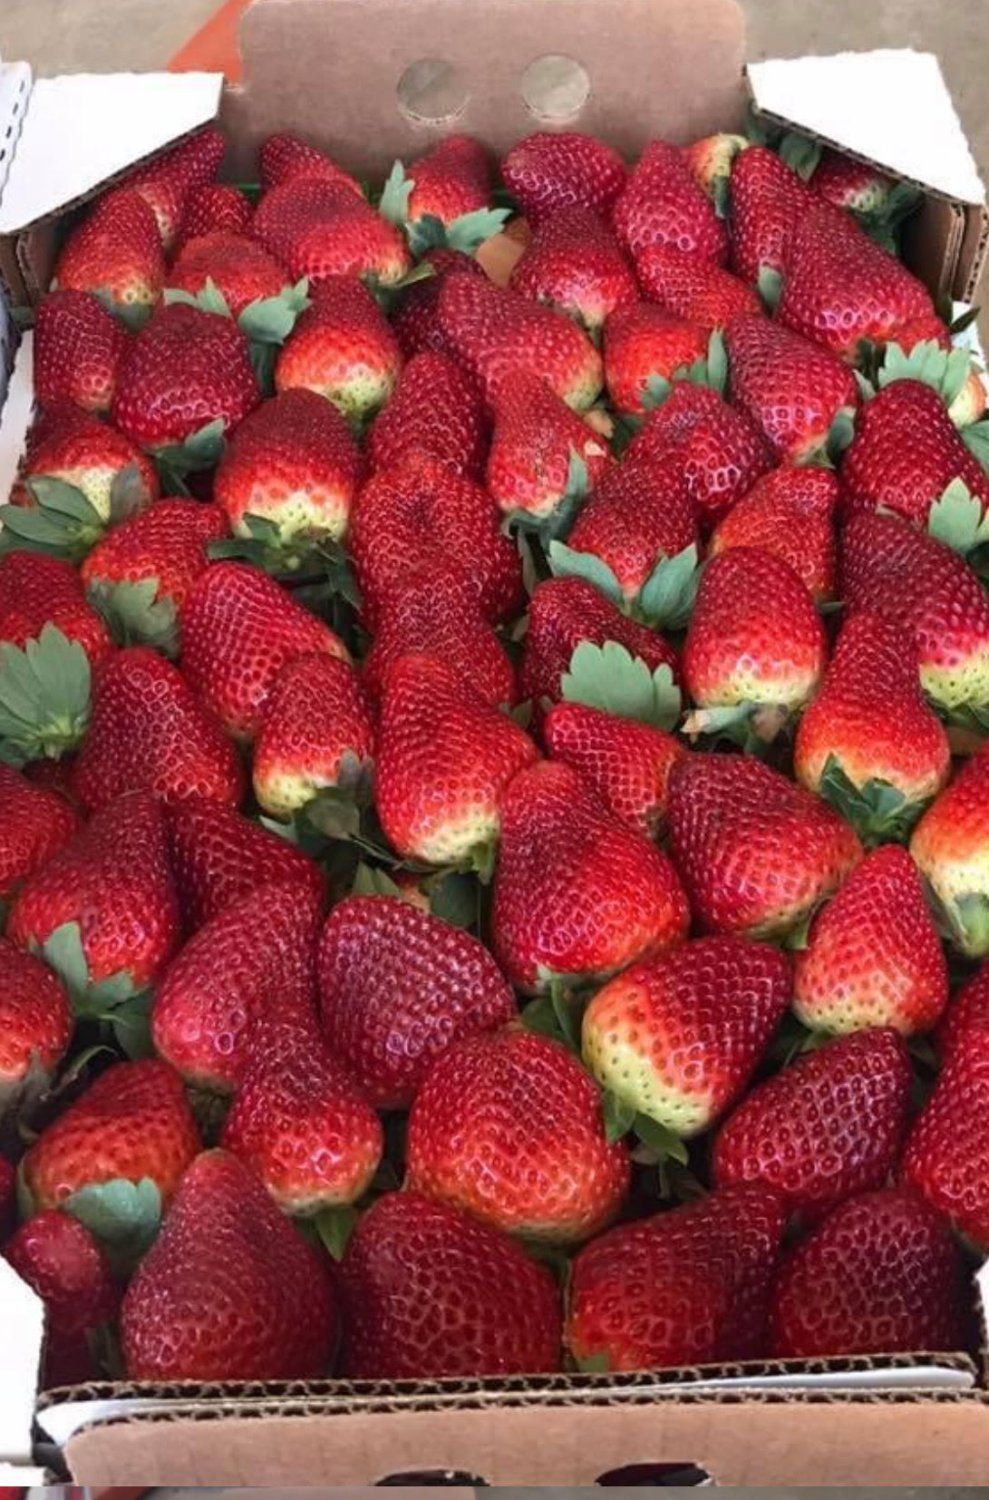 Next Happening: Strawberries Are Ripe!